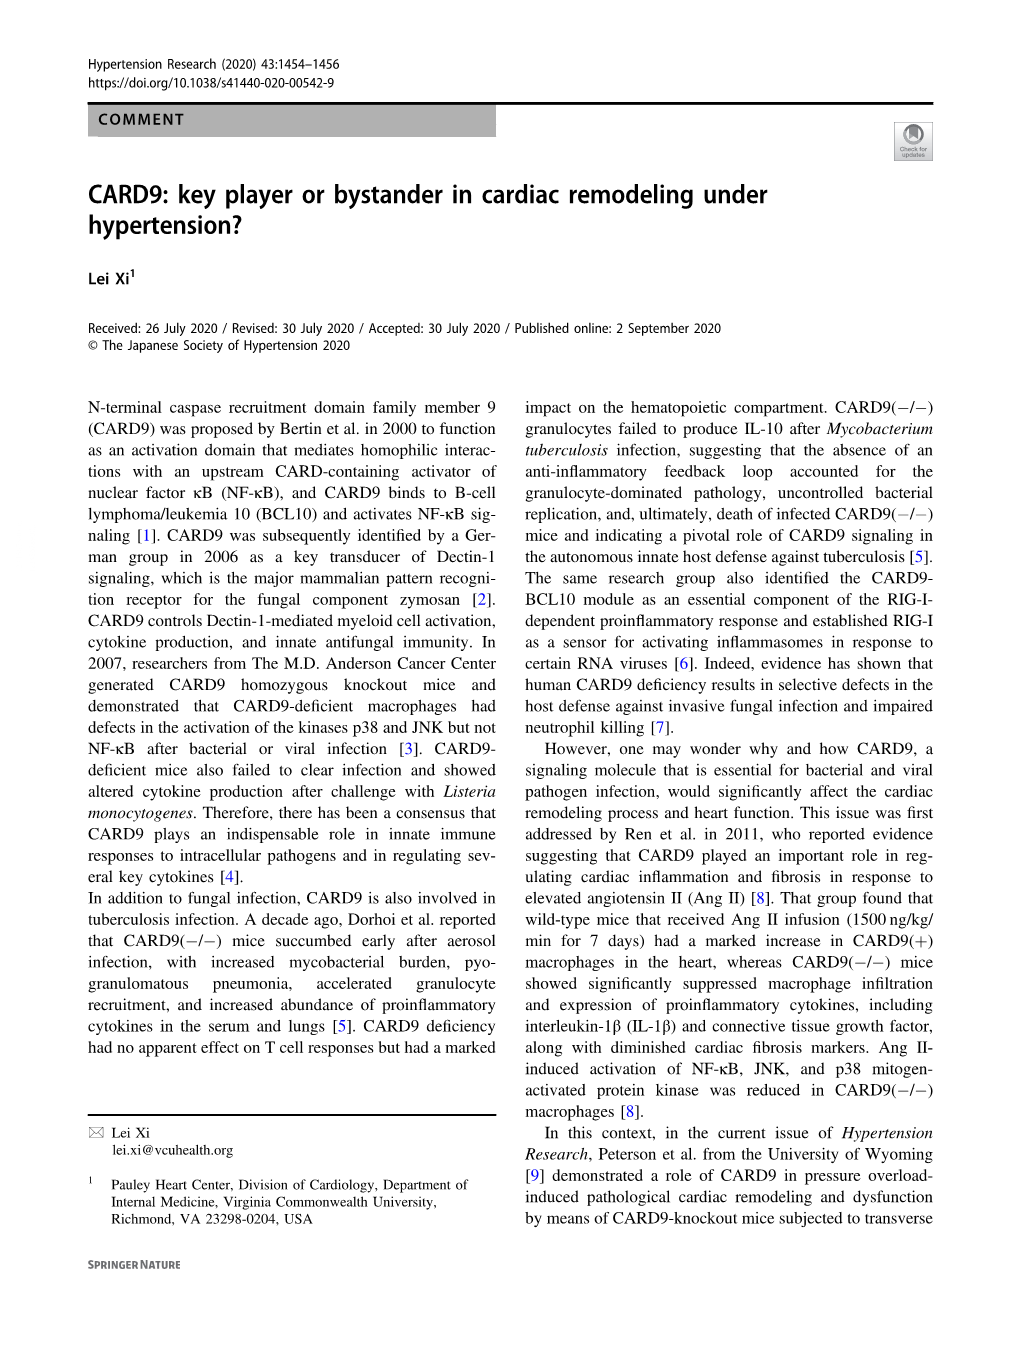 CARD9: Key Player Or Bystander in Cardiac Remodeling Under Hypertension?